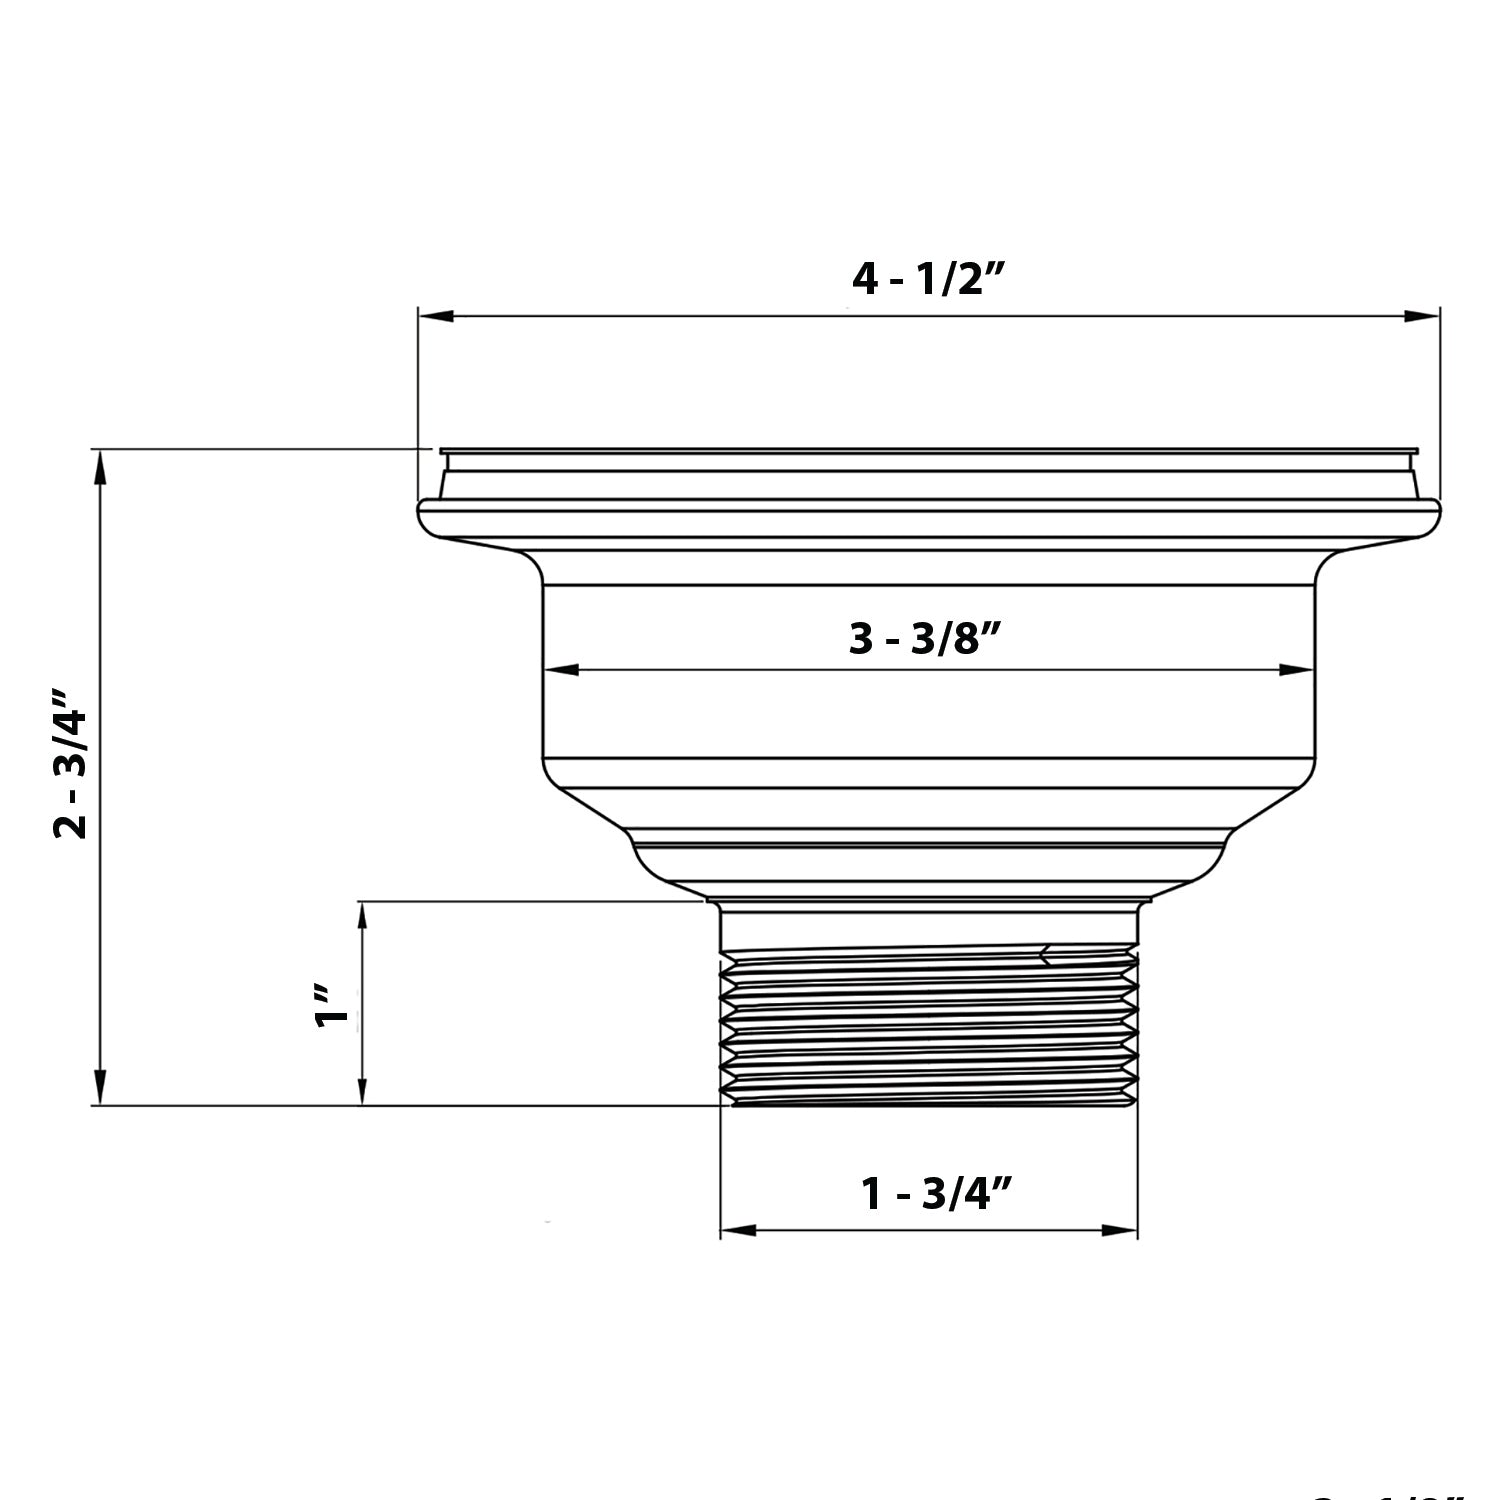 Ruvati Kitchen Sink Strainer Drain Assembly – Brass/Gold Tone Stainless Steel – RVA1022GG